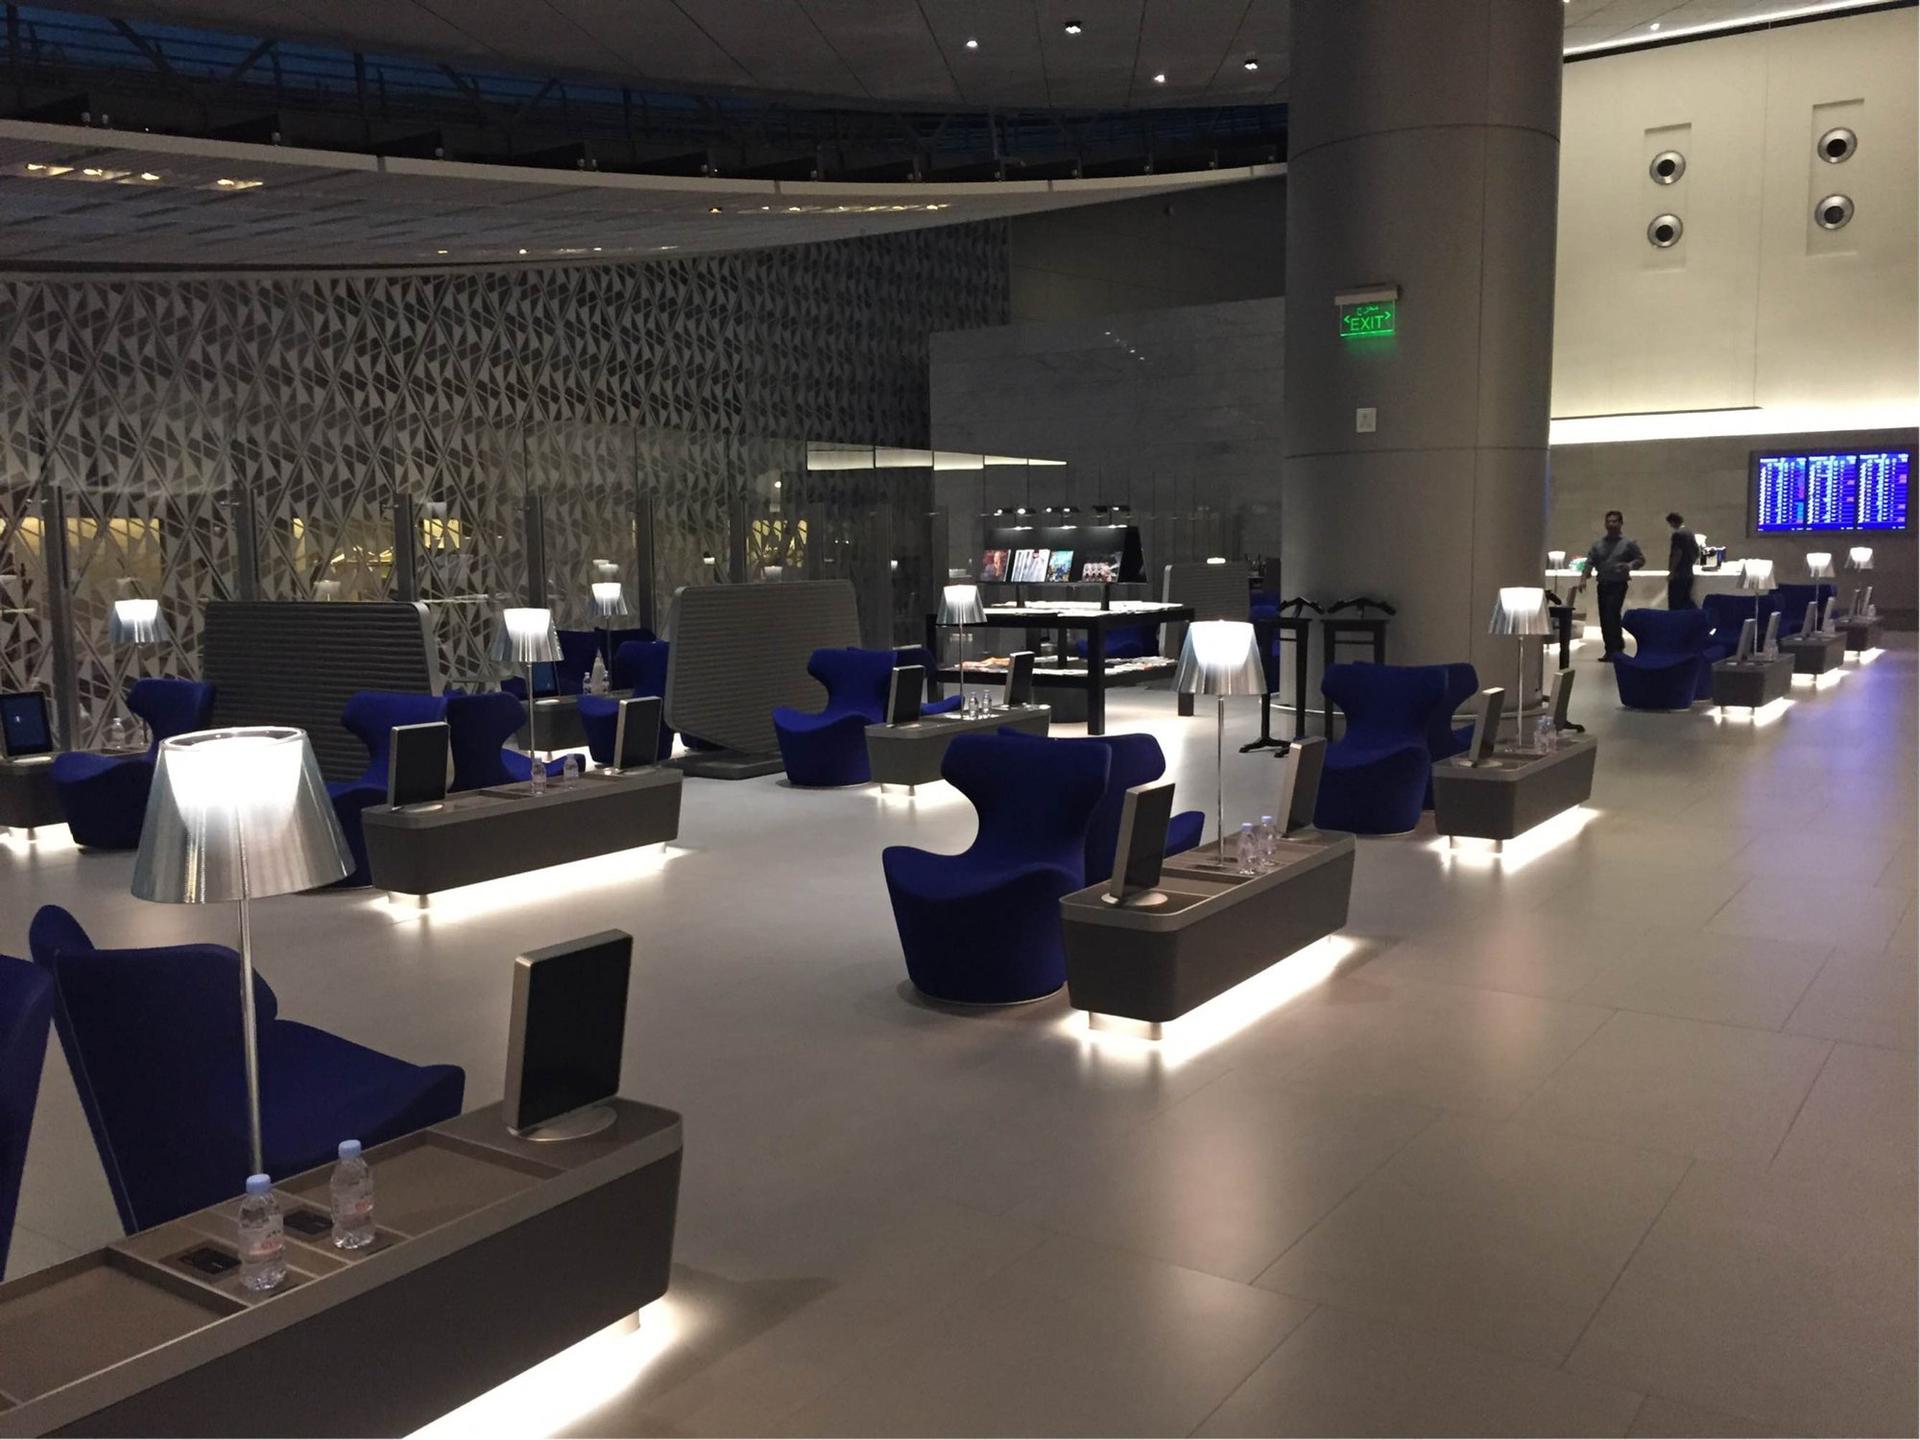 Qatar Airways Al Mourjan Business Class Lounge image 16 of 100